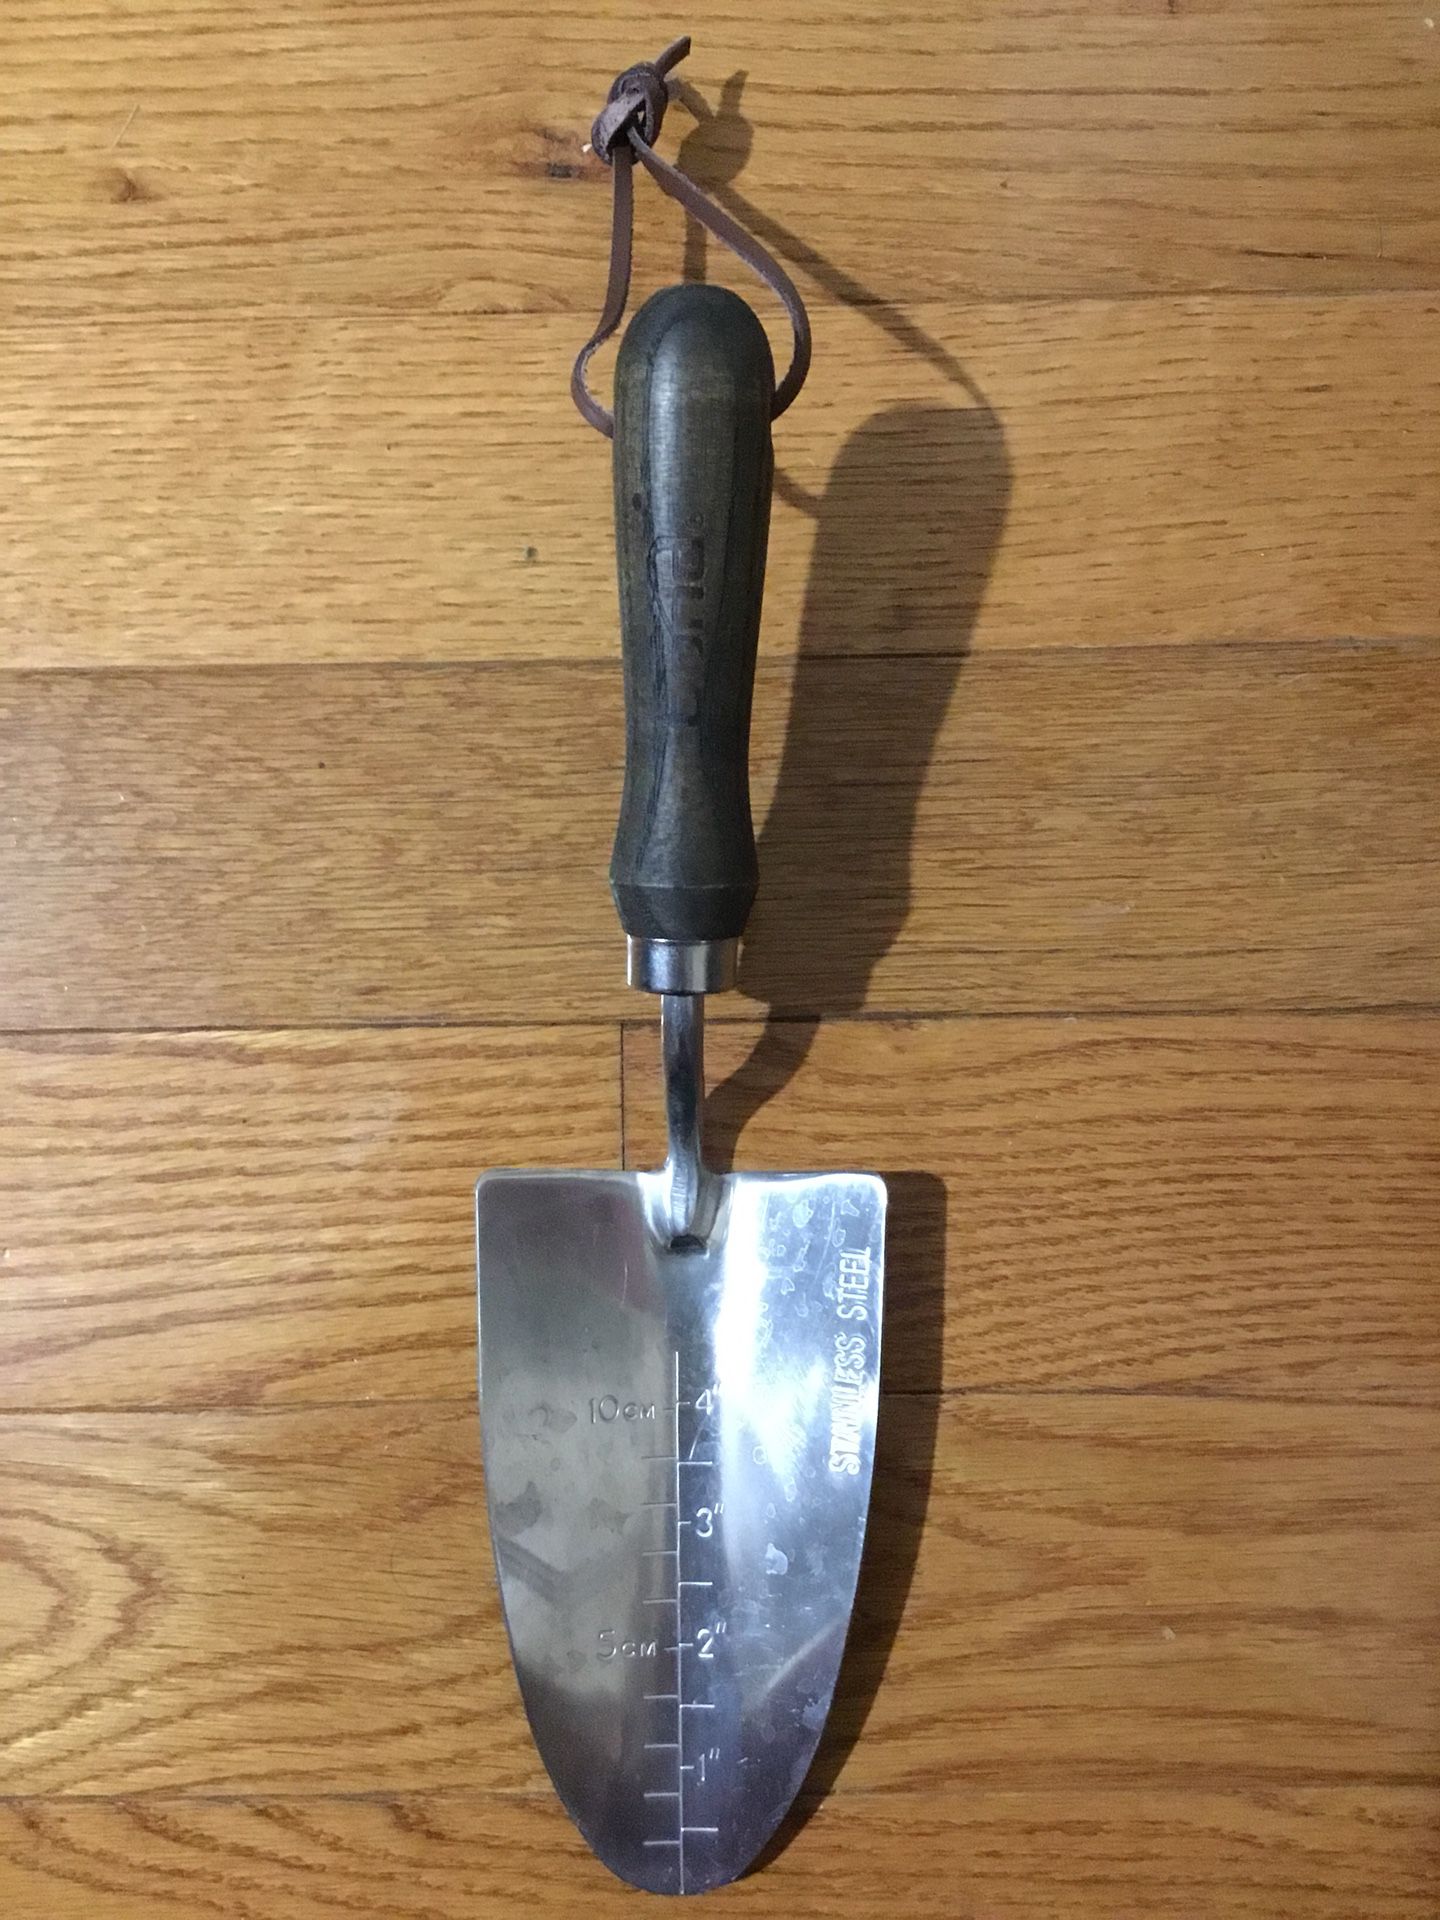 New hand shovel or spade for farming or gardening